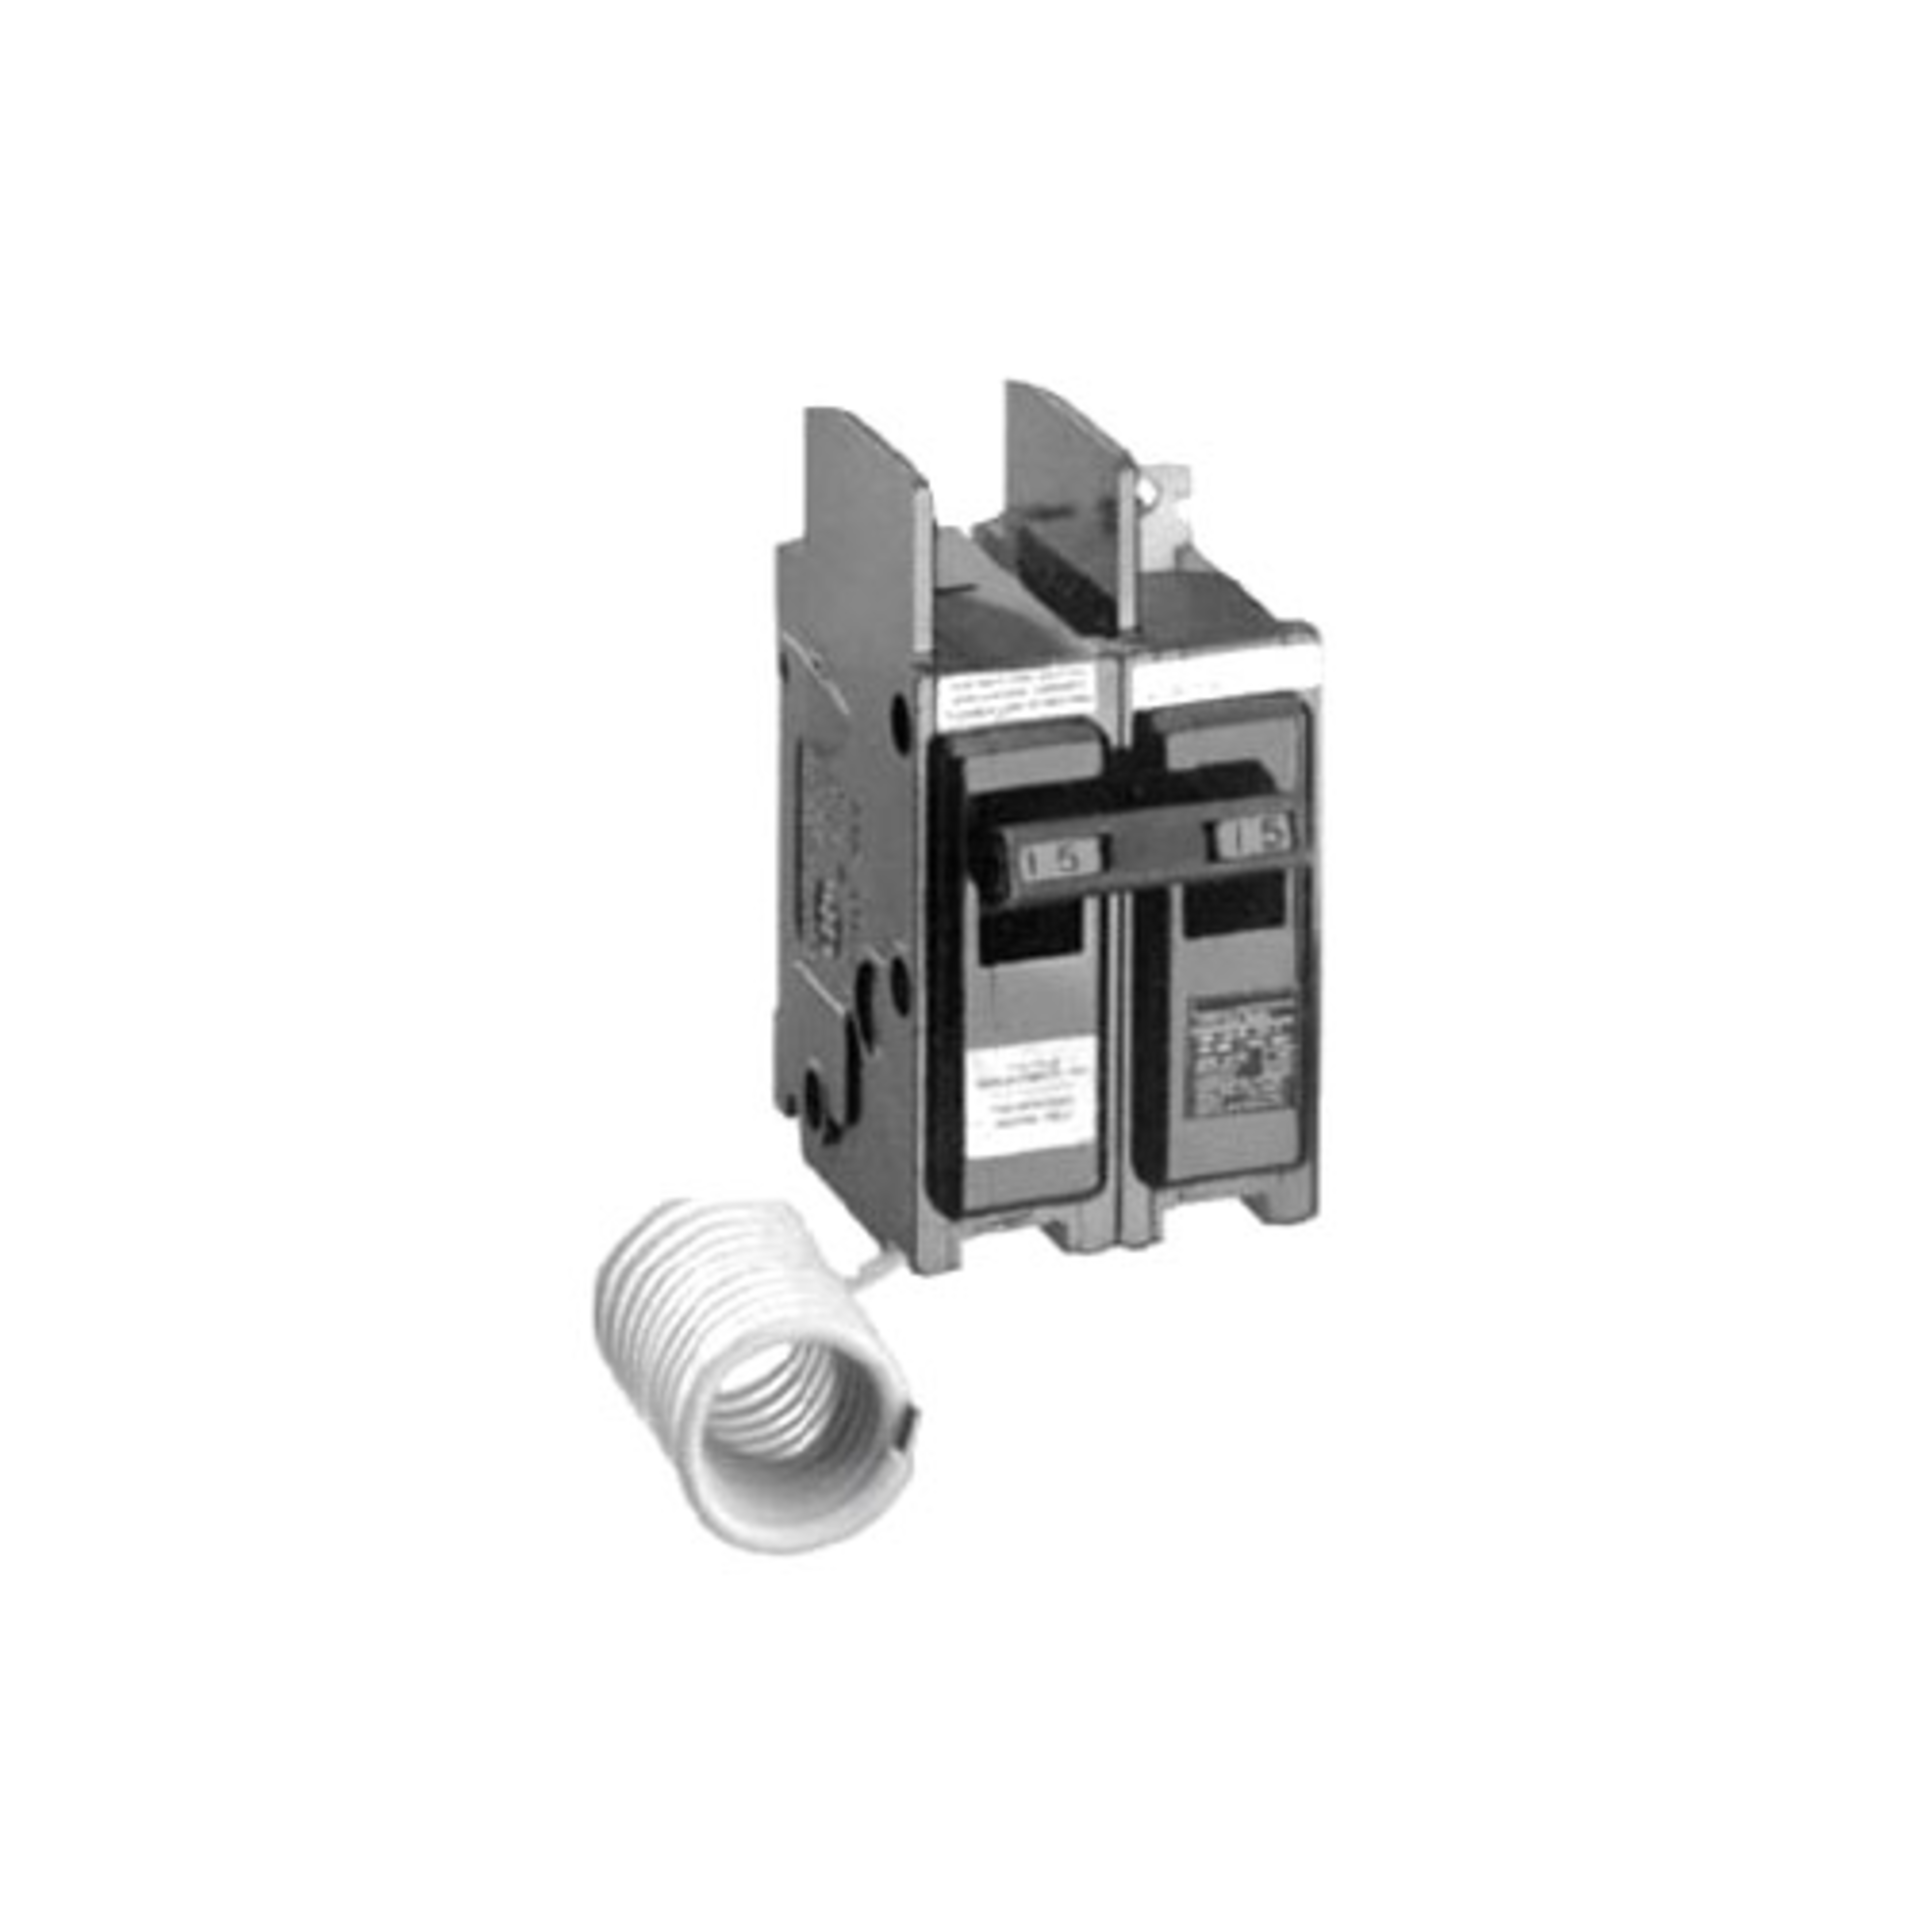 1x Siemens BG2B015 Miniature Circuit Breakers (MCBs) B 2P 15A 120V 50/60Hz 1Ph